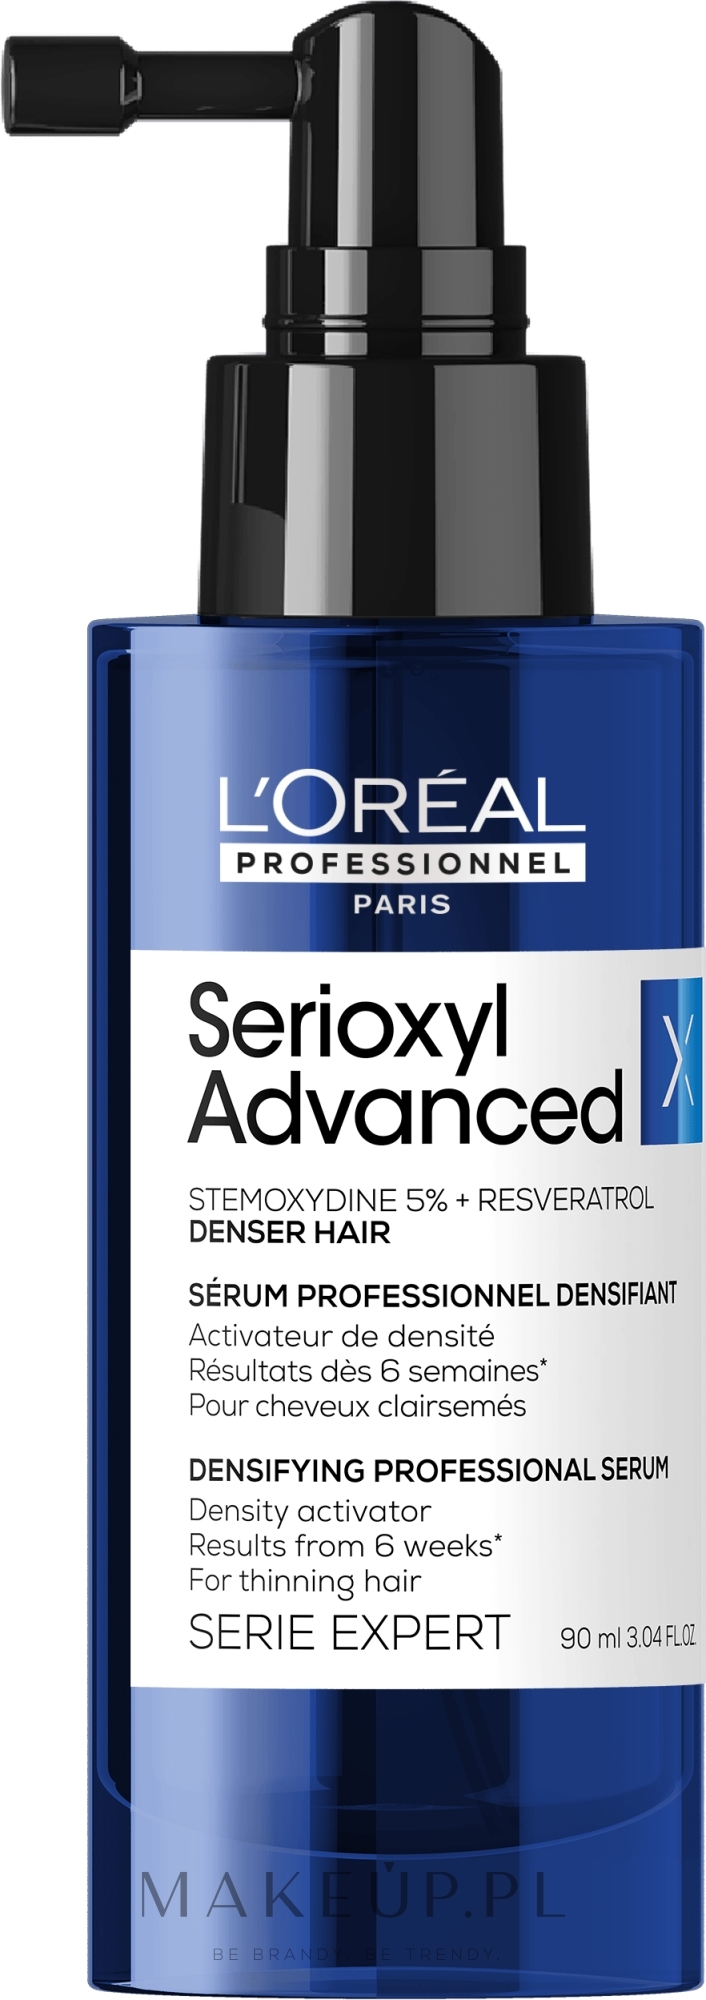 Serum do włosów - L'Oreal Professionnel Serioxyl Advanced Denser Hair Serum — Zdjęcie 90 ml